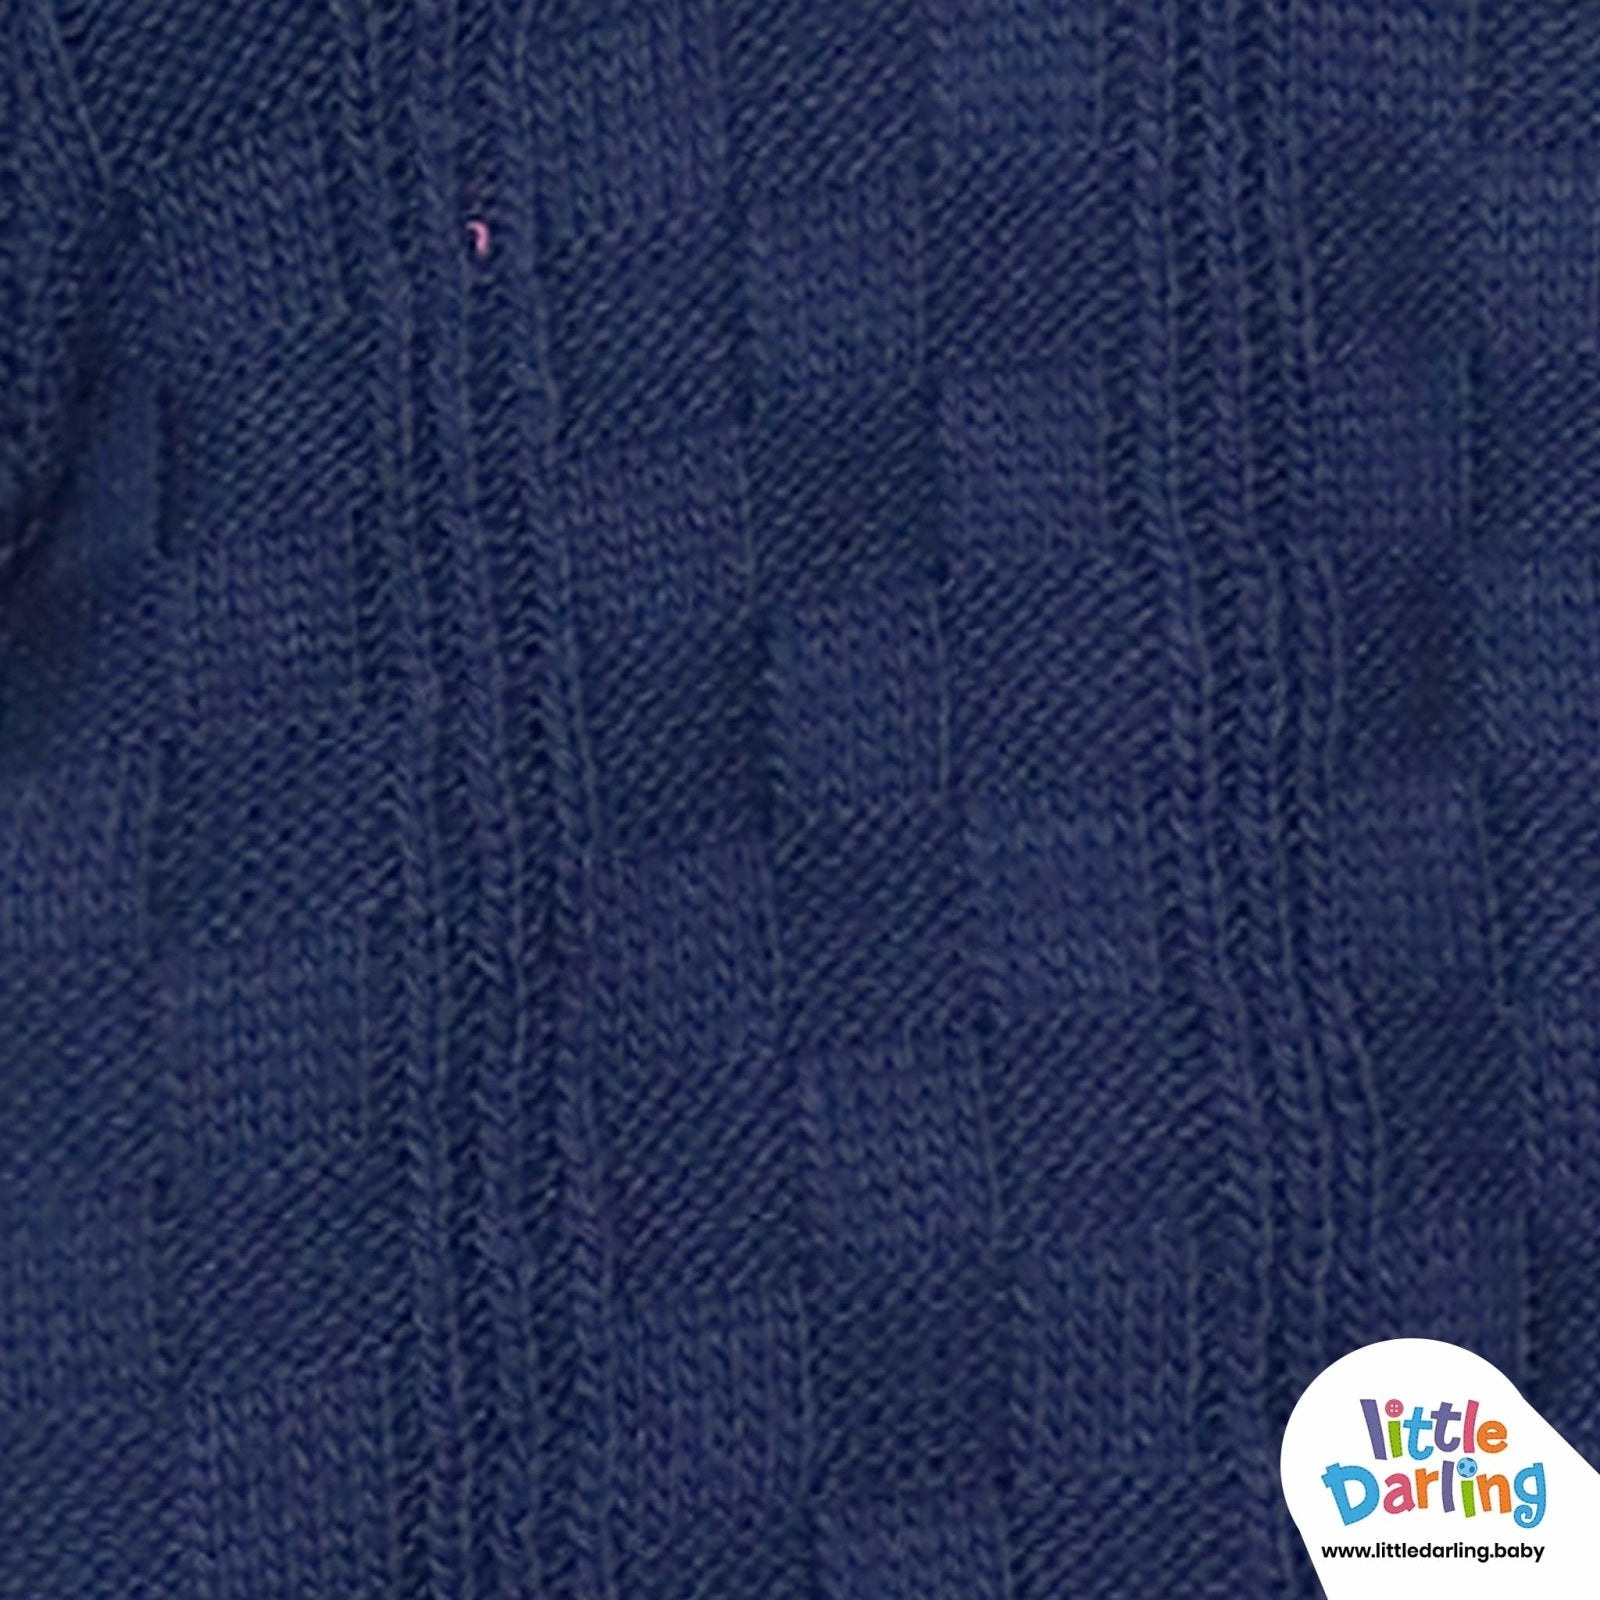 Hooded Woolen Romper Box Pattern Navy Blue Color by Little Darling